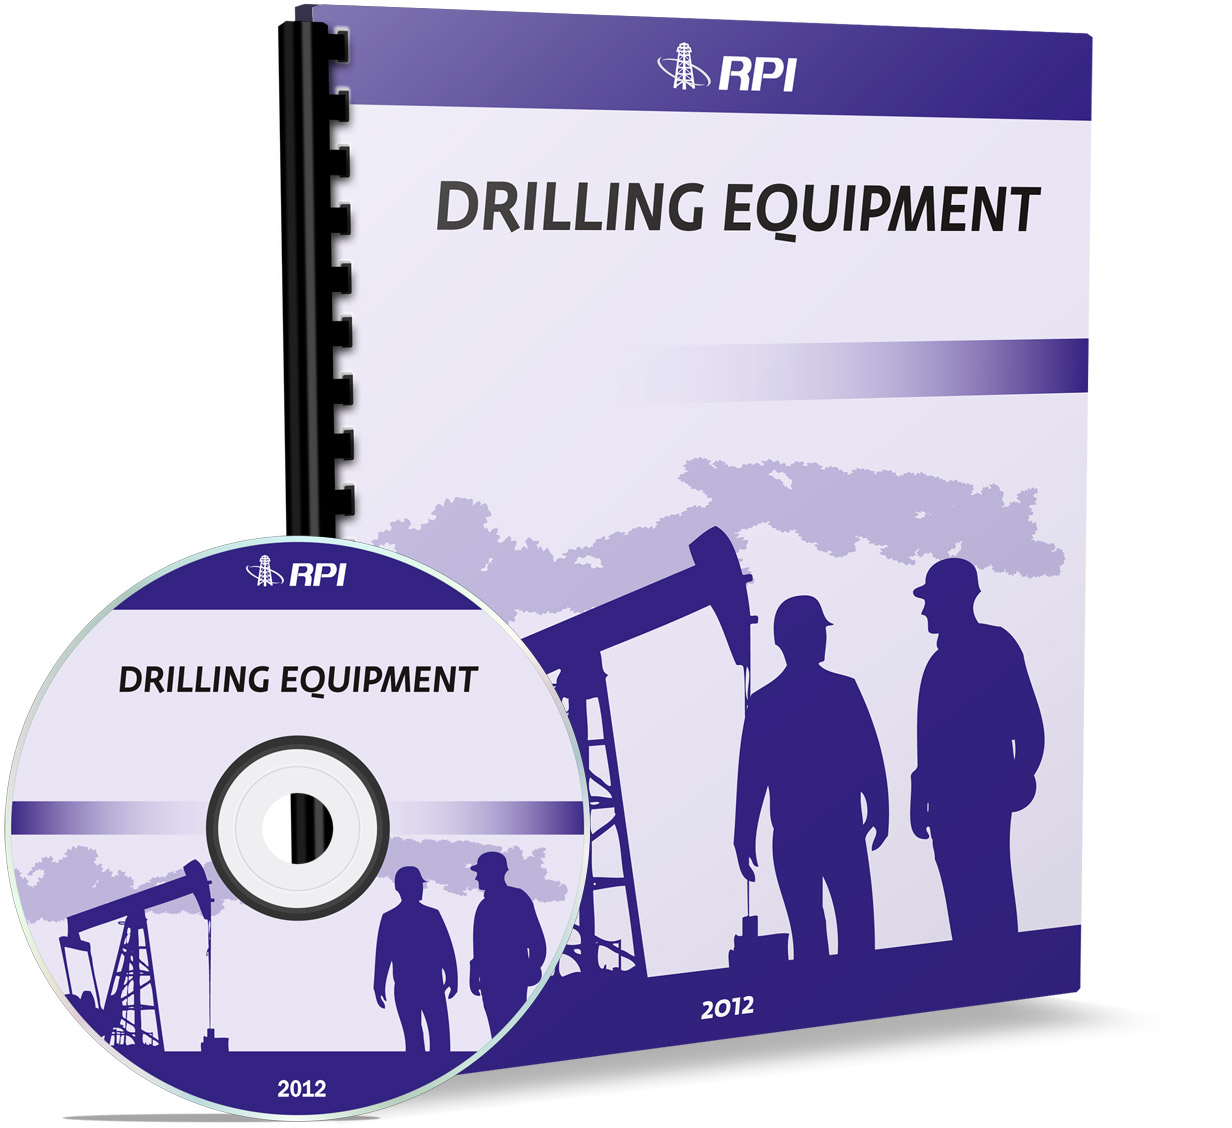 Drilling Equipment Market in Russia